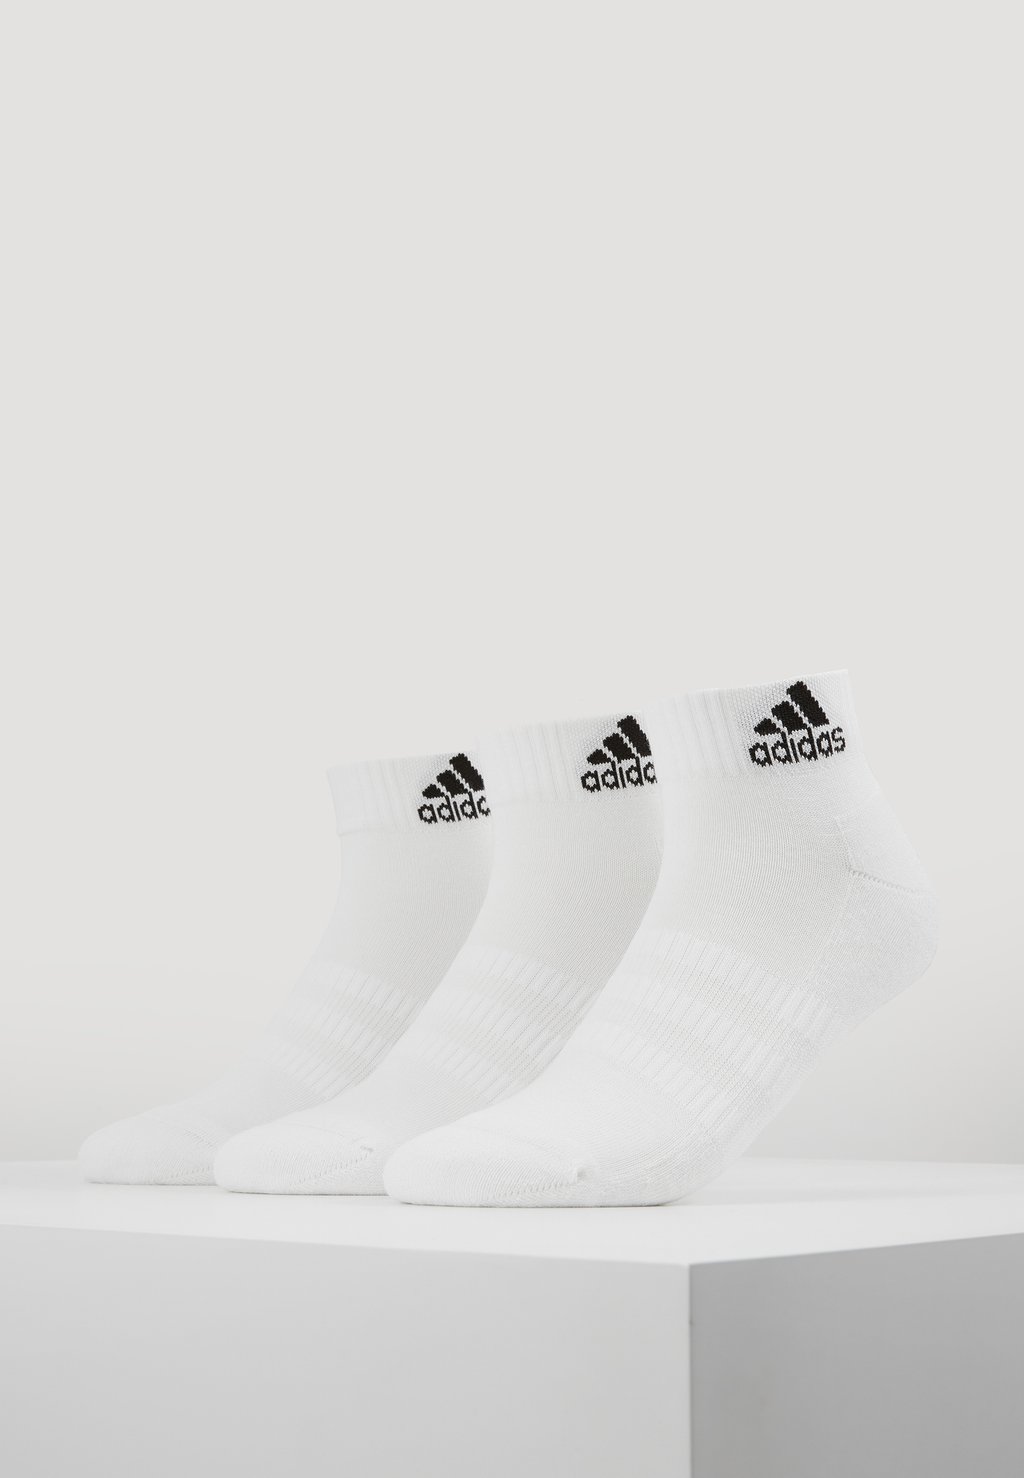 спортивные носки cush sock unisex adidas цвет white black Носки спортивные SOCKEN CUSH ANK 3PP adidas Performance, цвет white